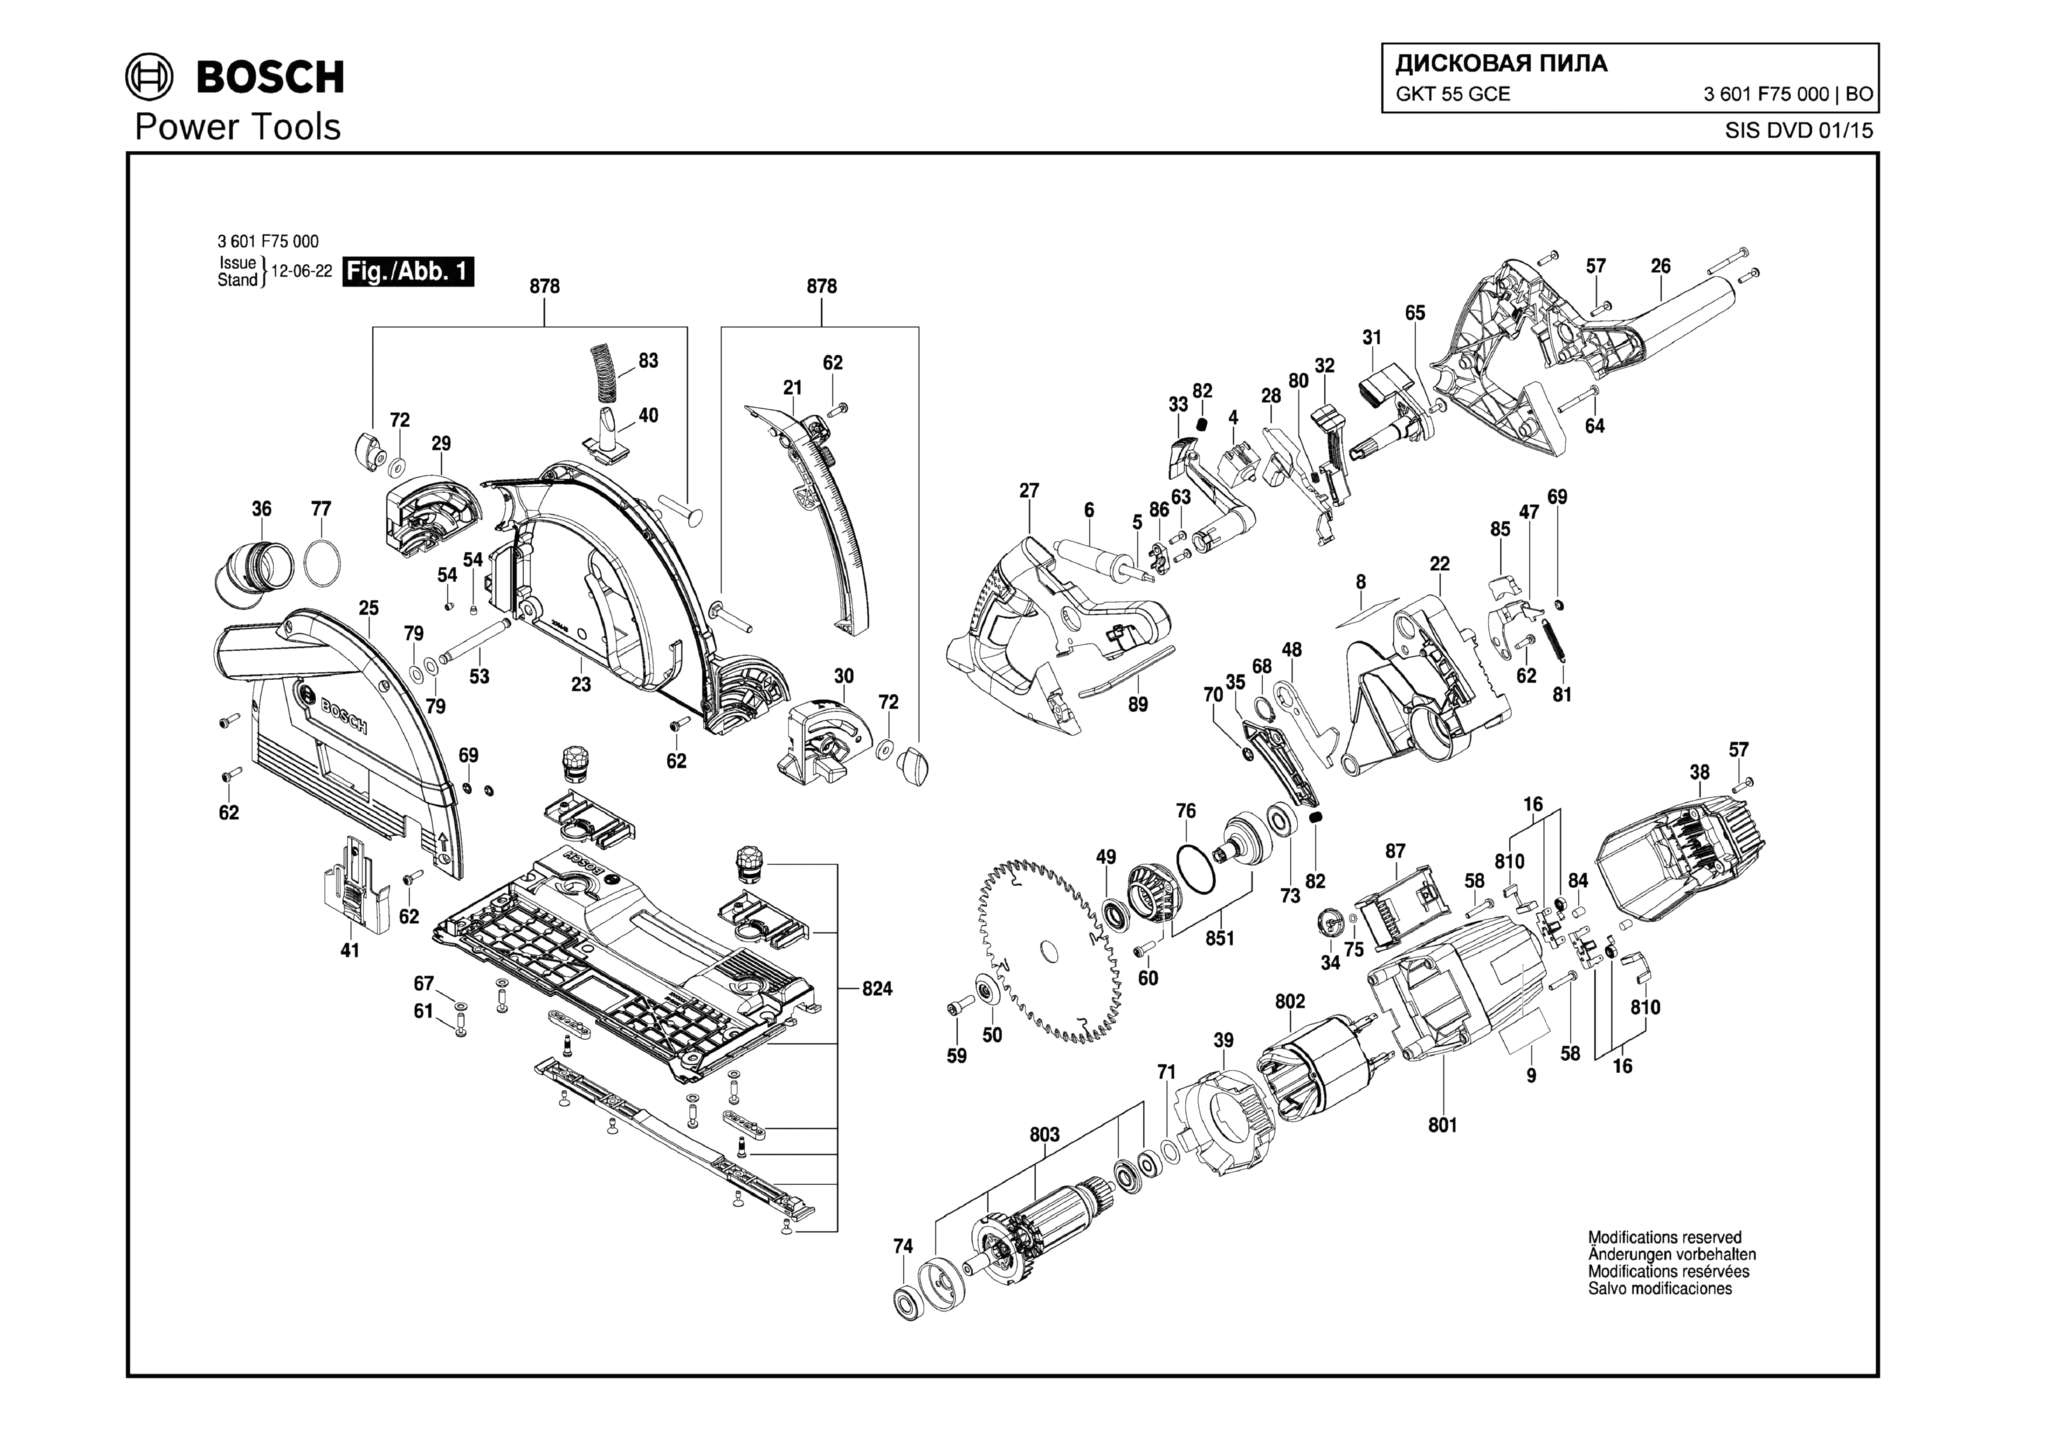 Запчасти, схема и деталировка Bosch GKT 55 GCE (ТИП 3601F75000)